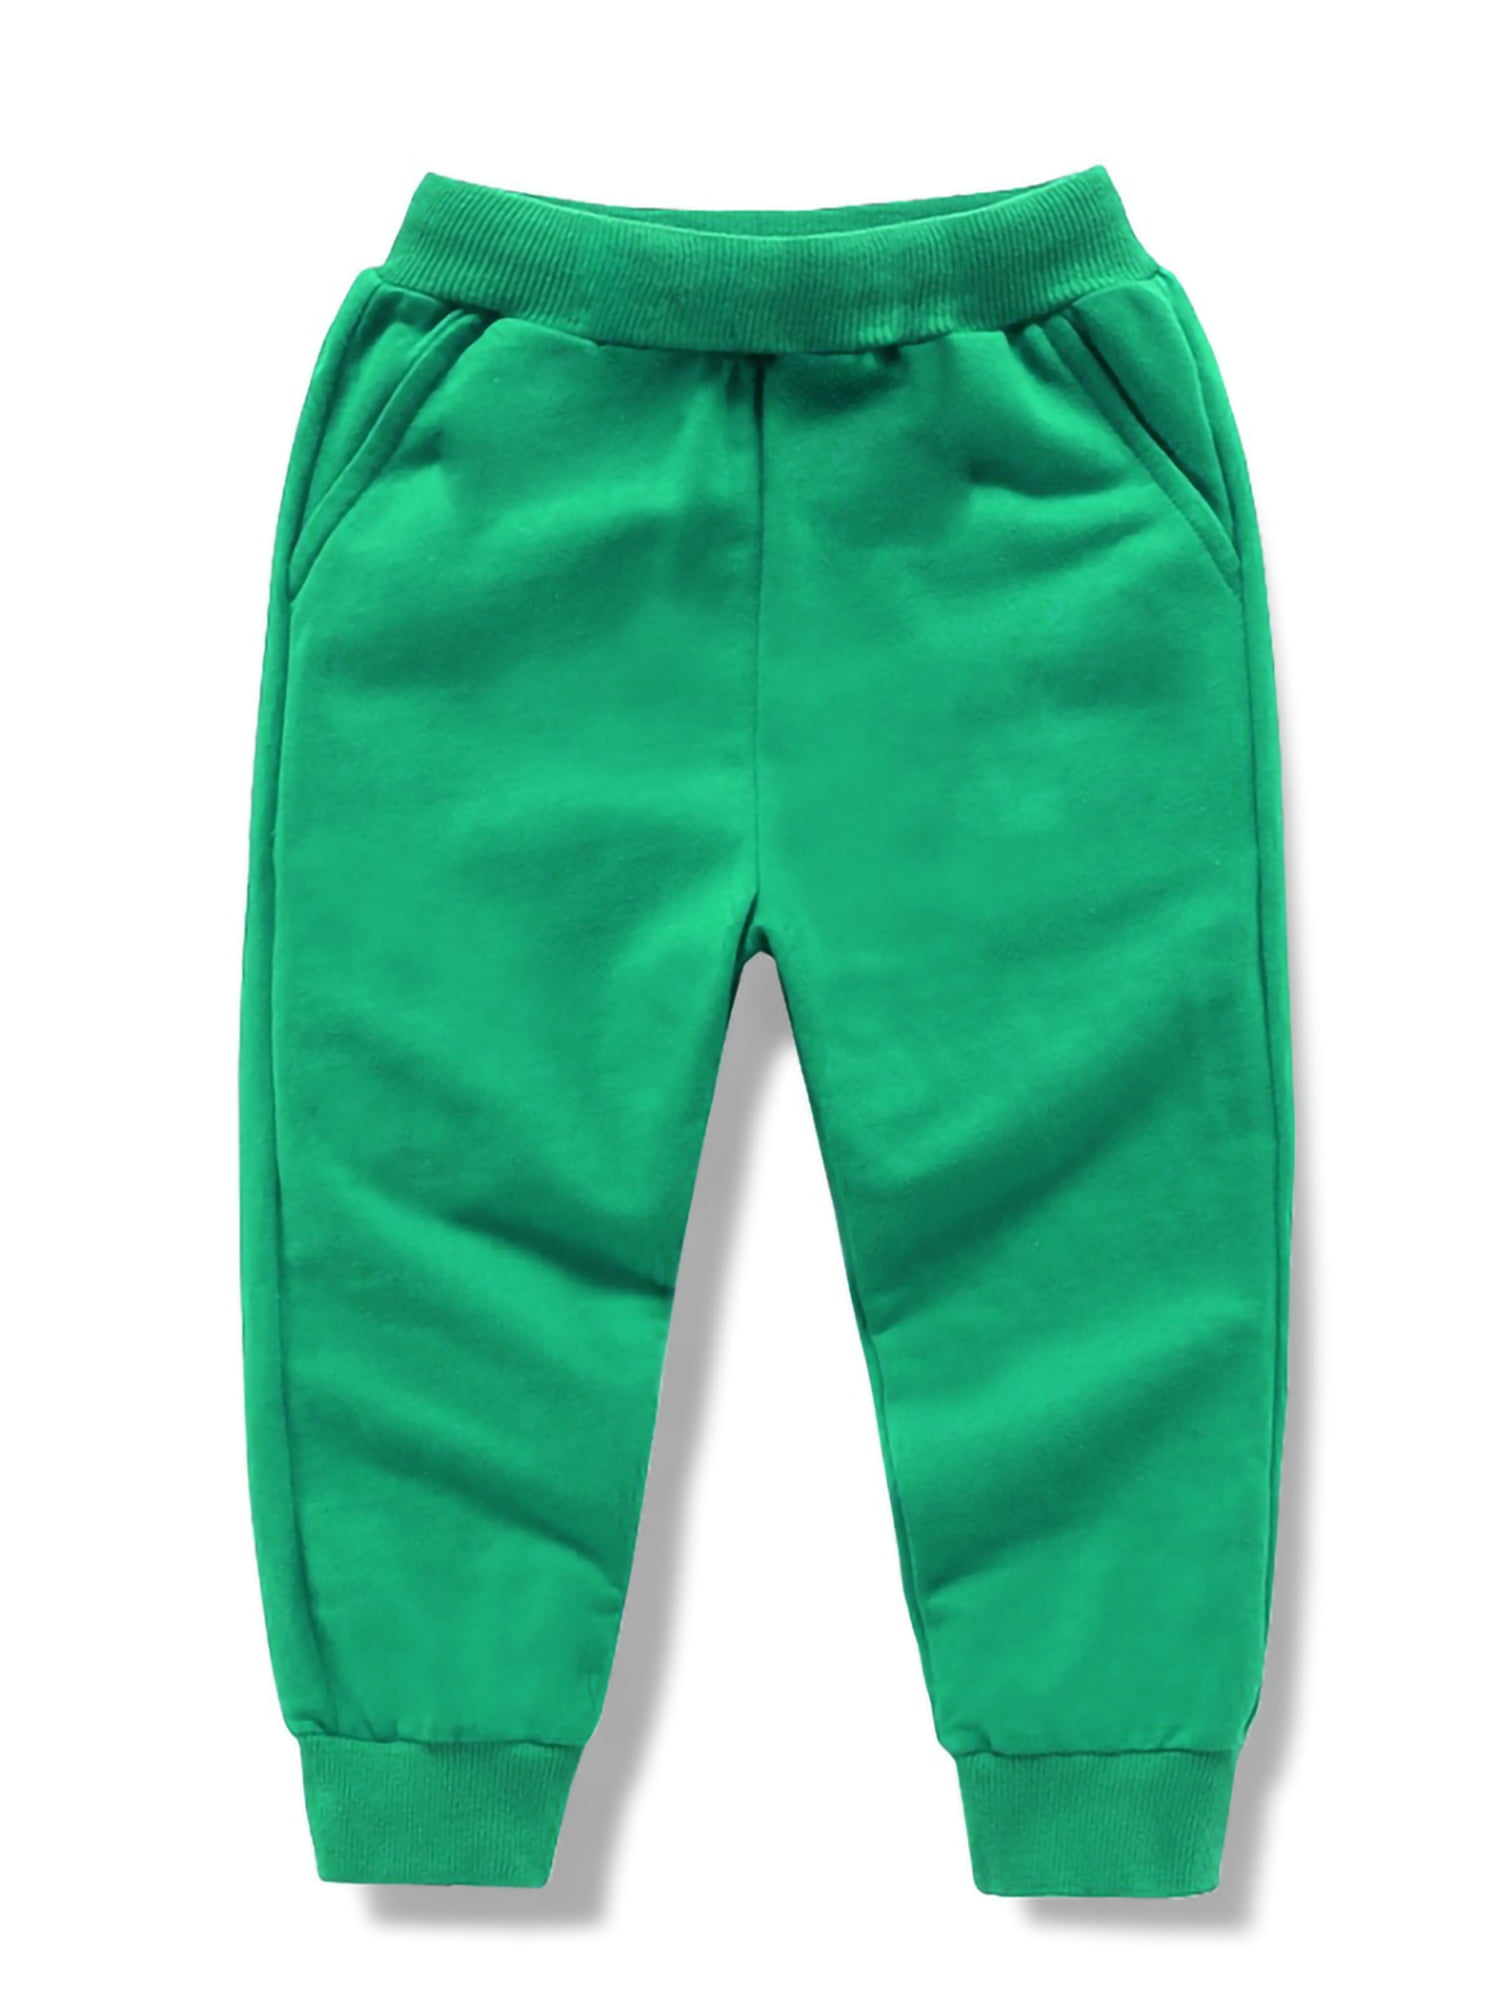 Boys Green Pants